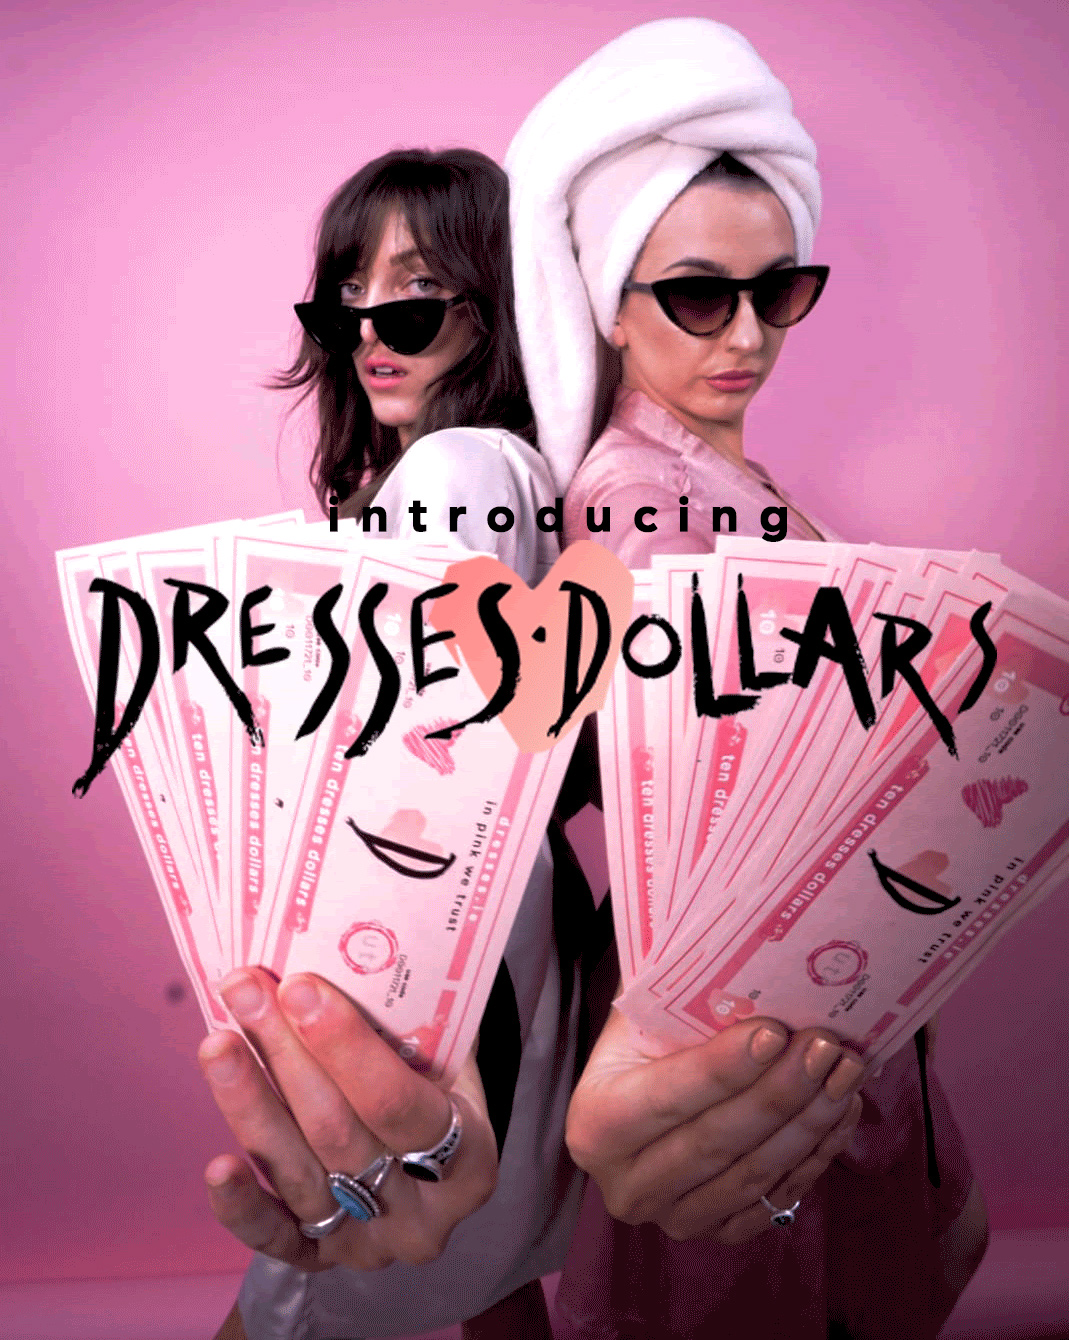 Dresses Dollars